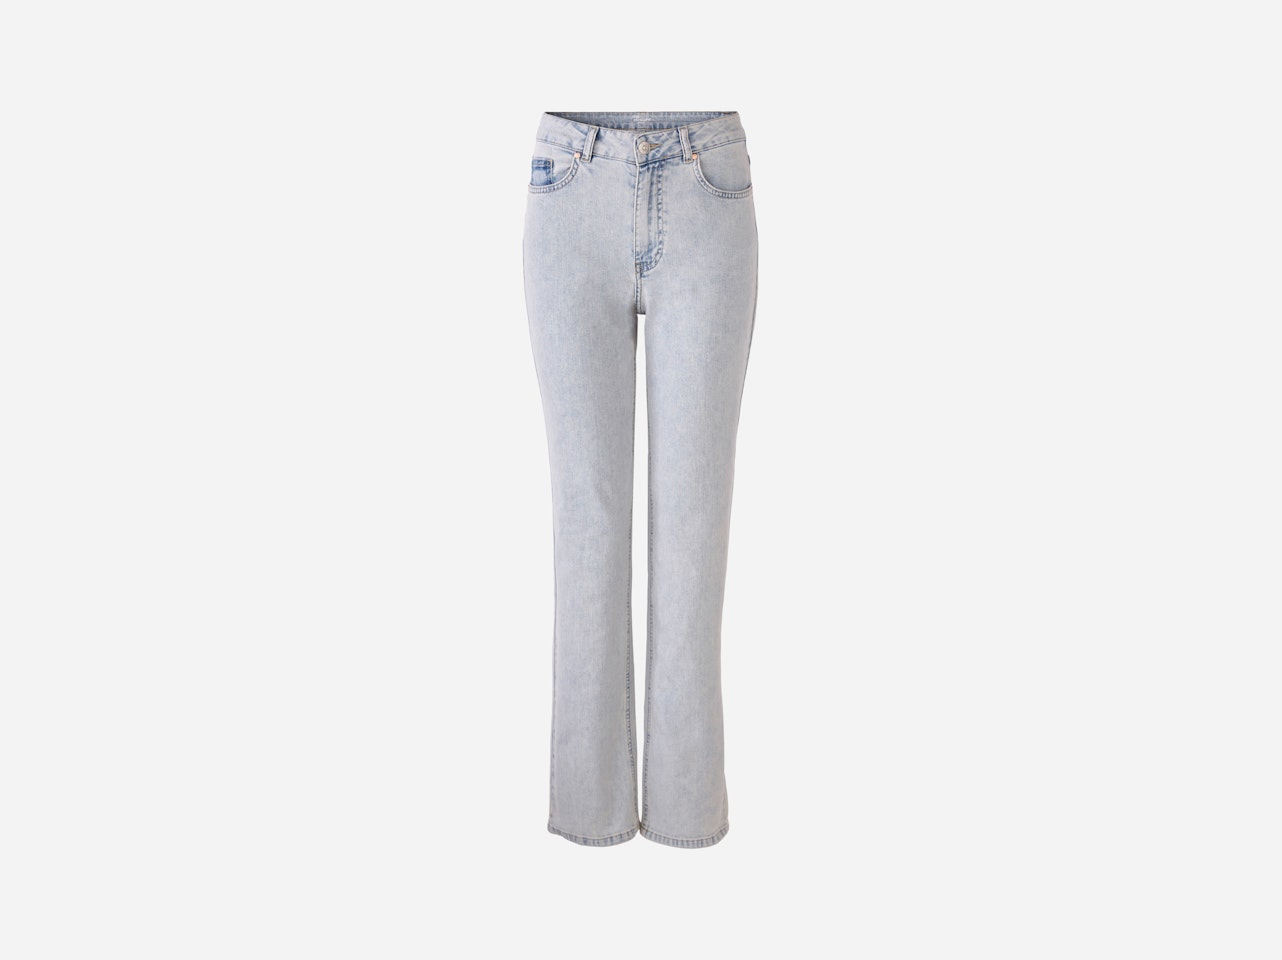 Bild 7 von Denim trousers in long length in blue denim | Oui